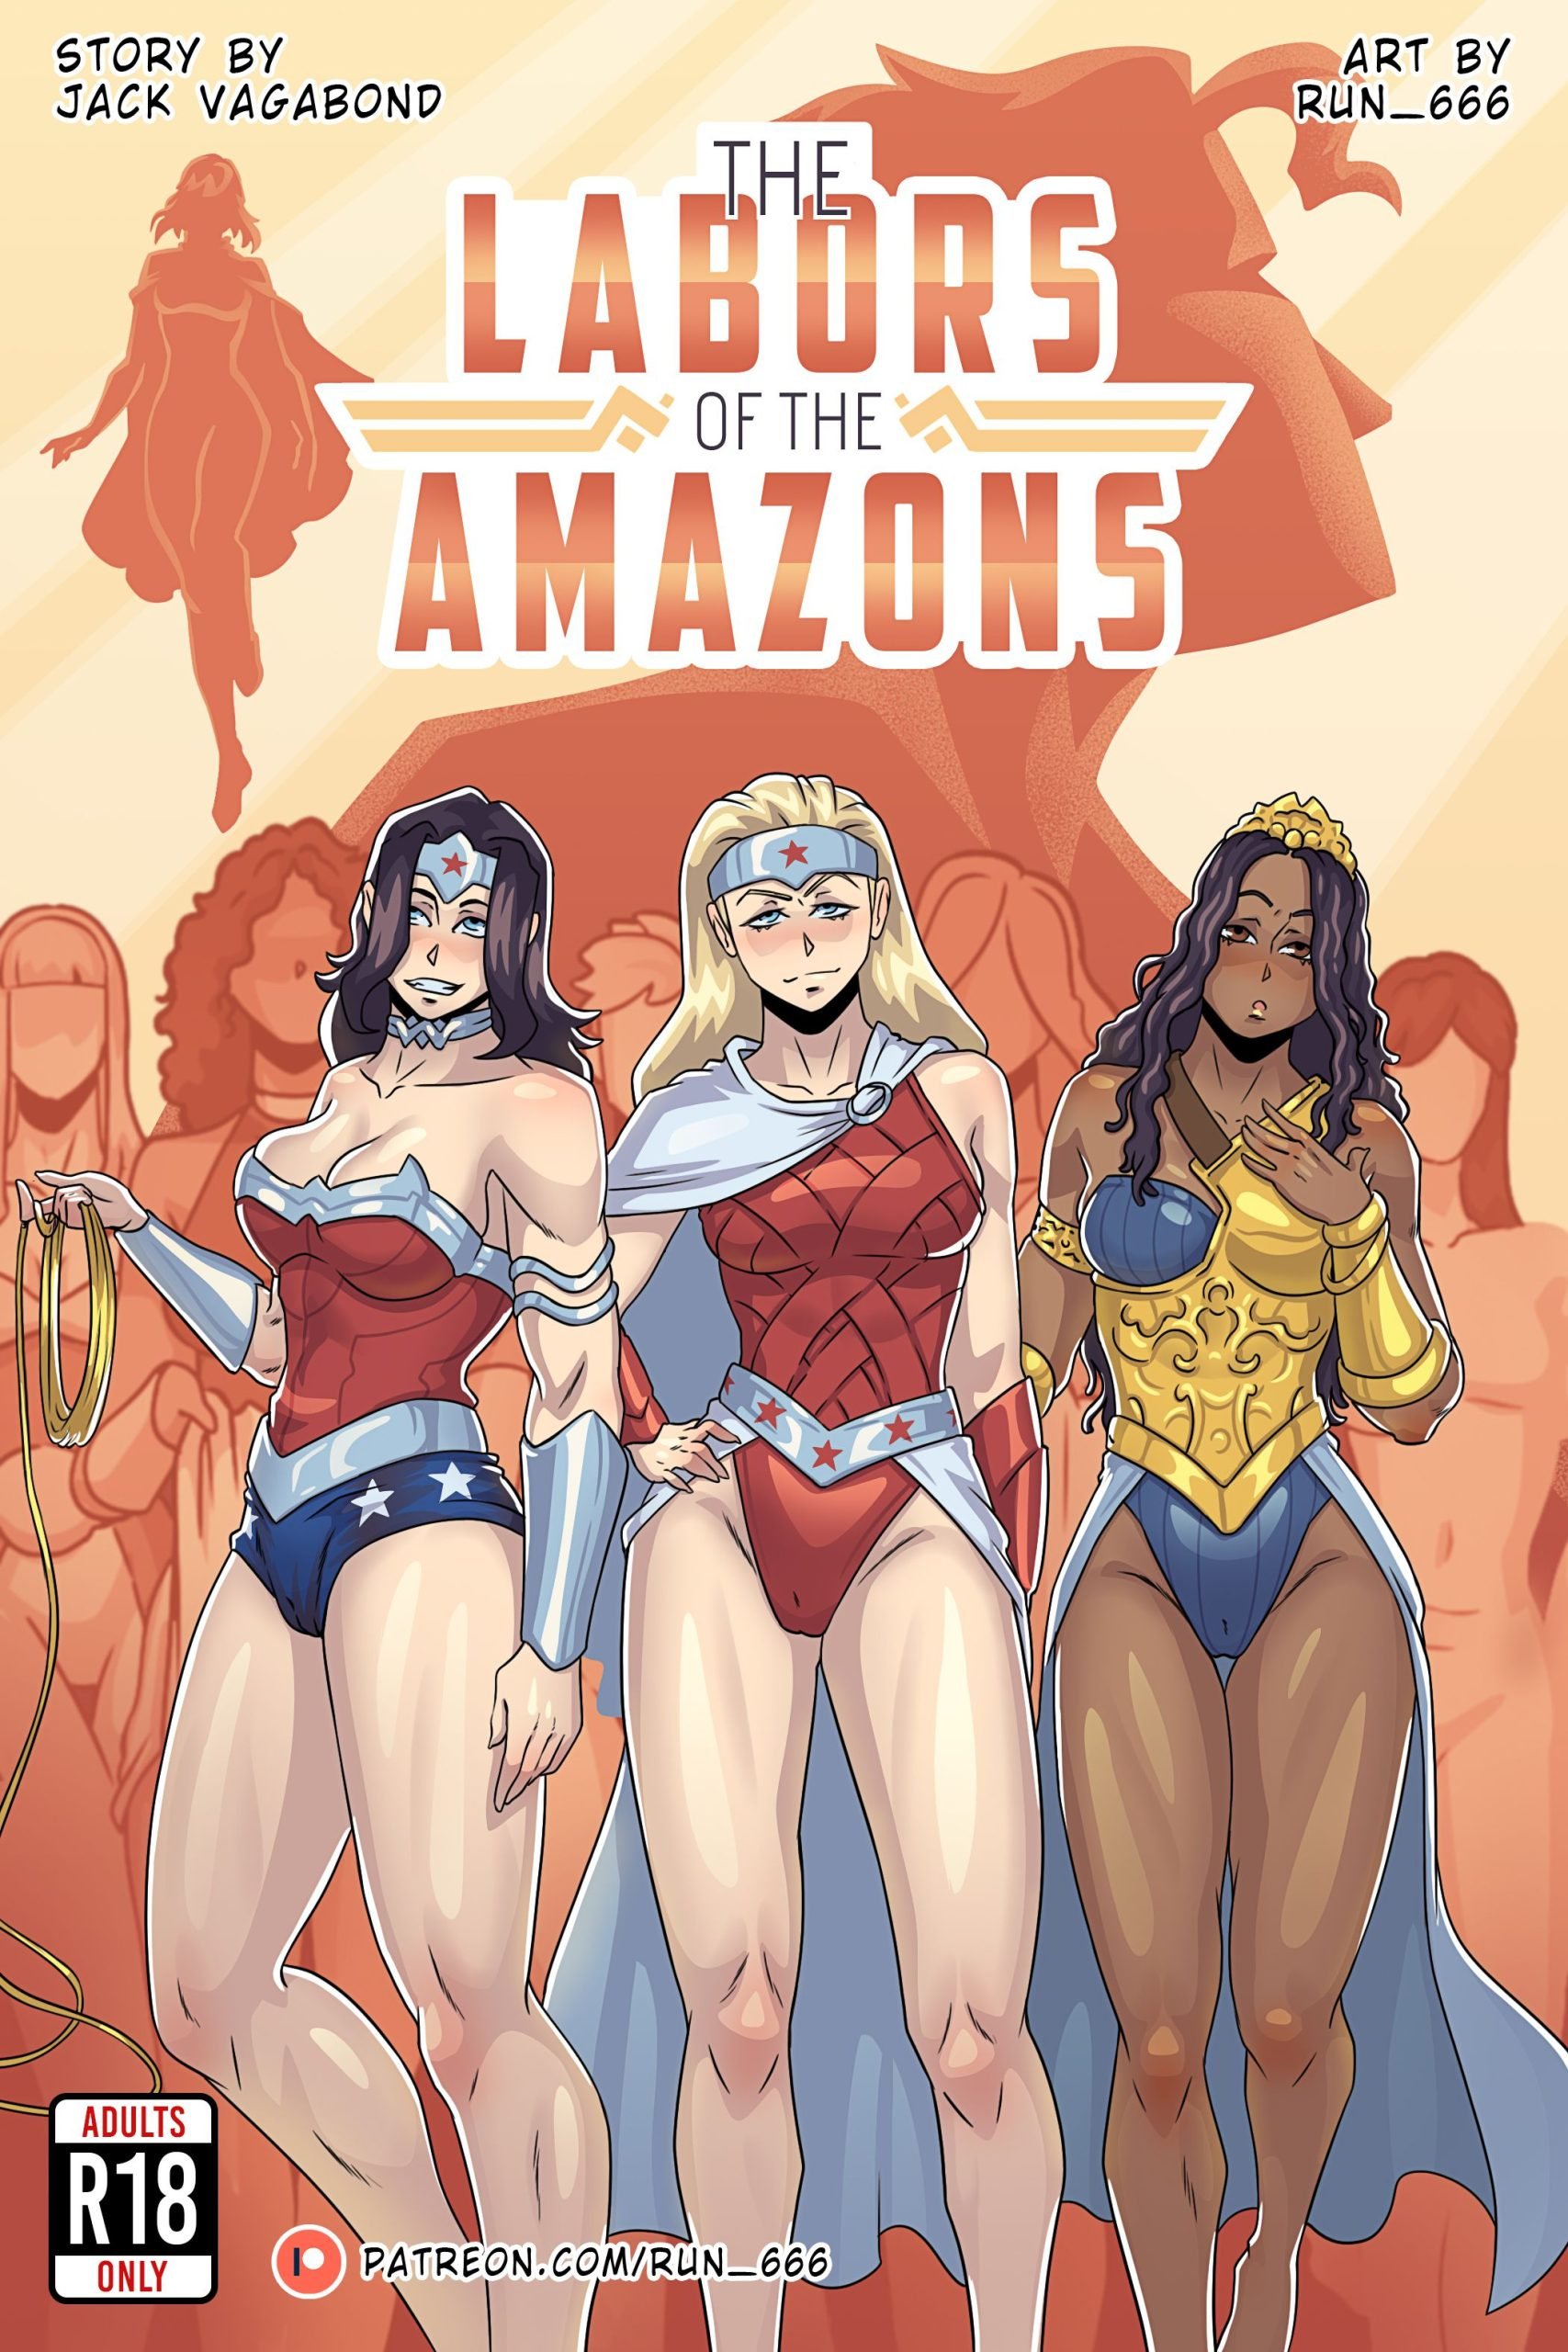 The Labors of the Amazons (Wonder Woman) Run 666 Porn Comic image photo